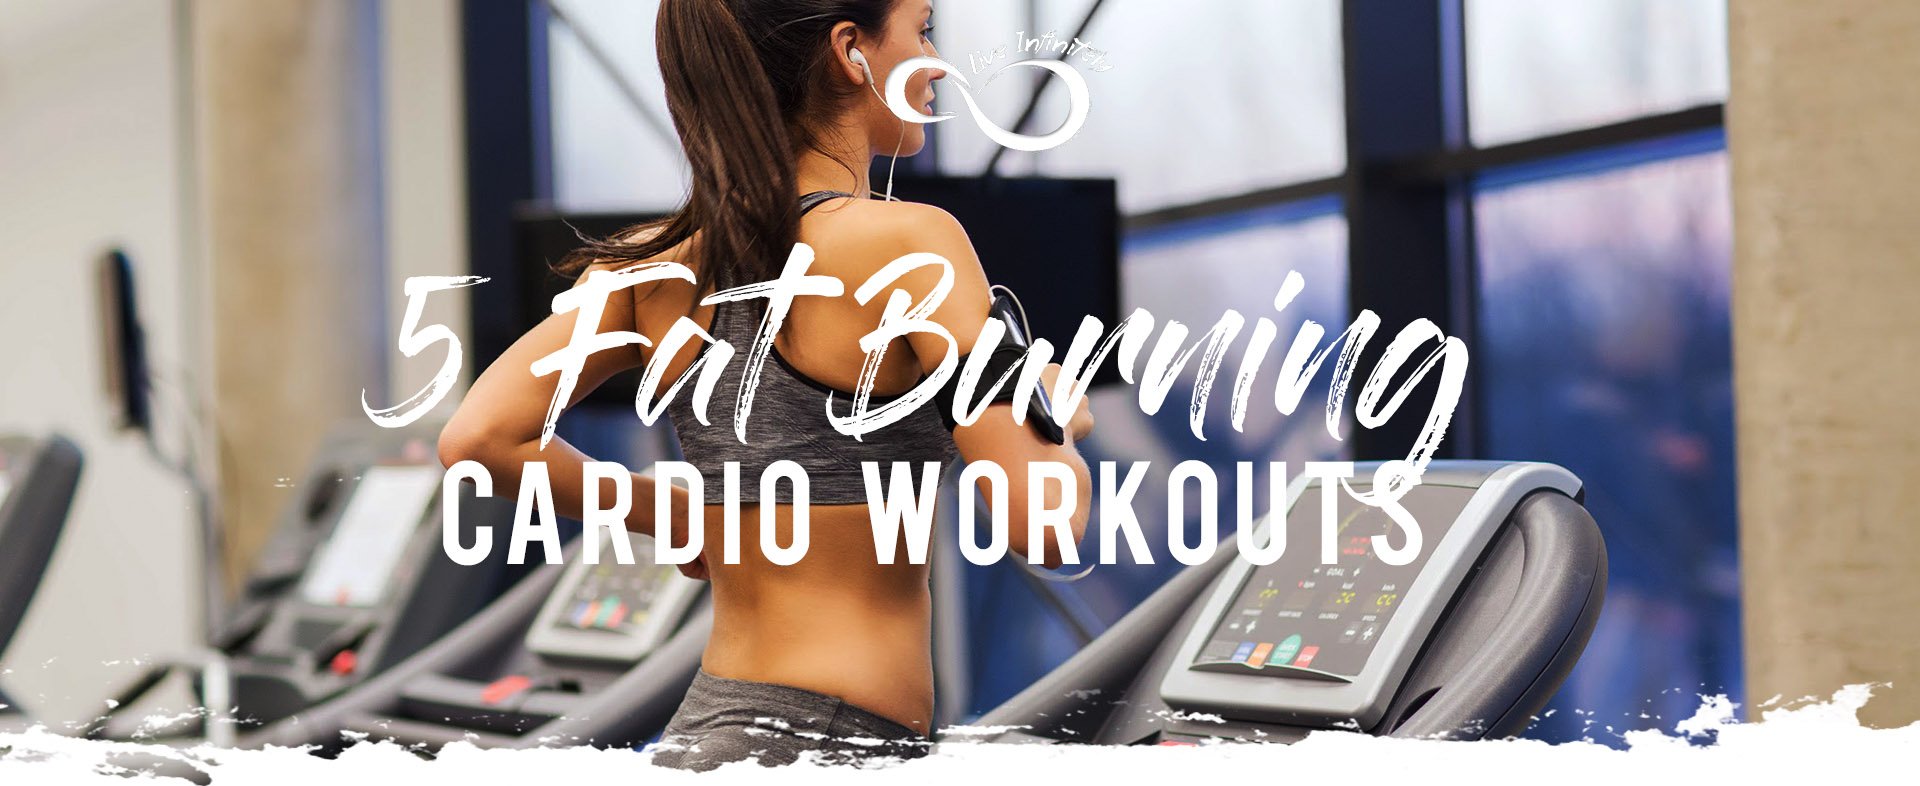 5 Fat Burning Cardio Workouts